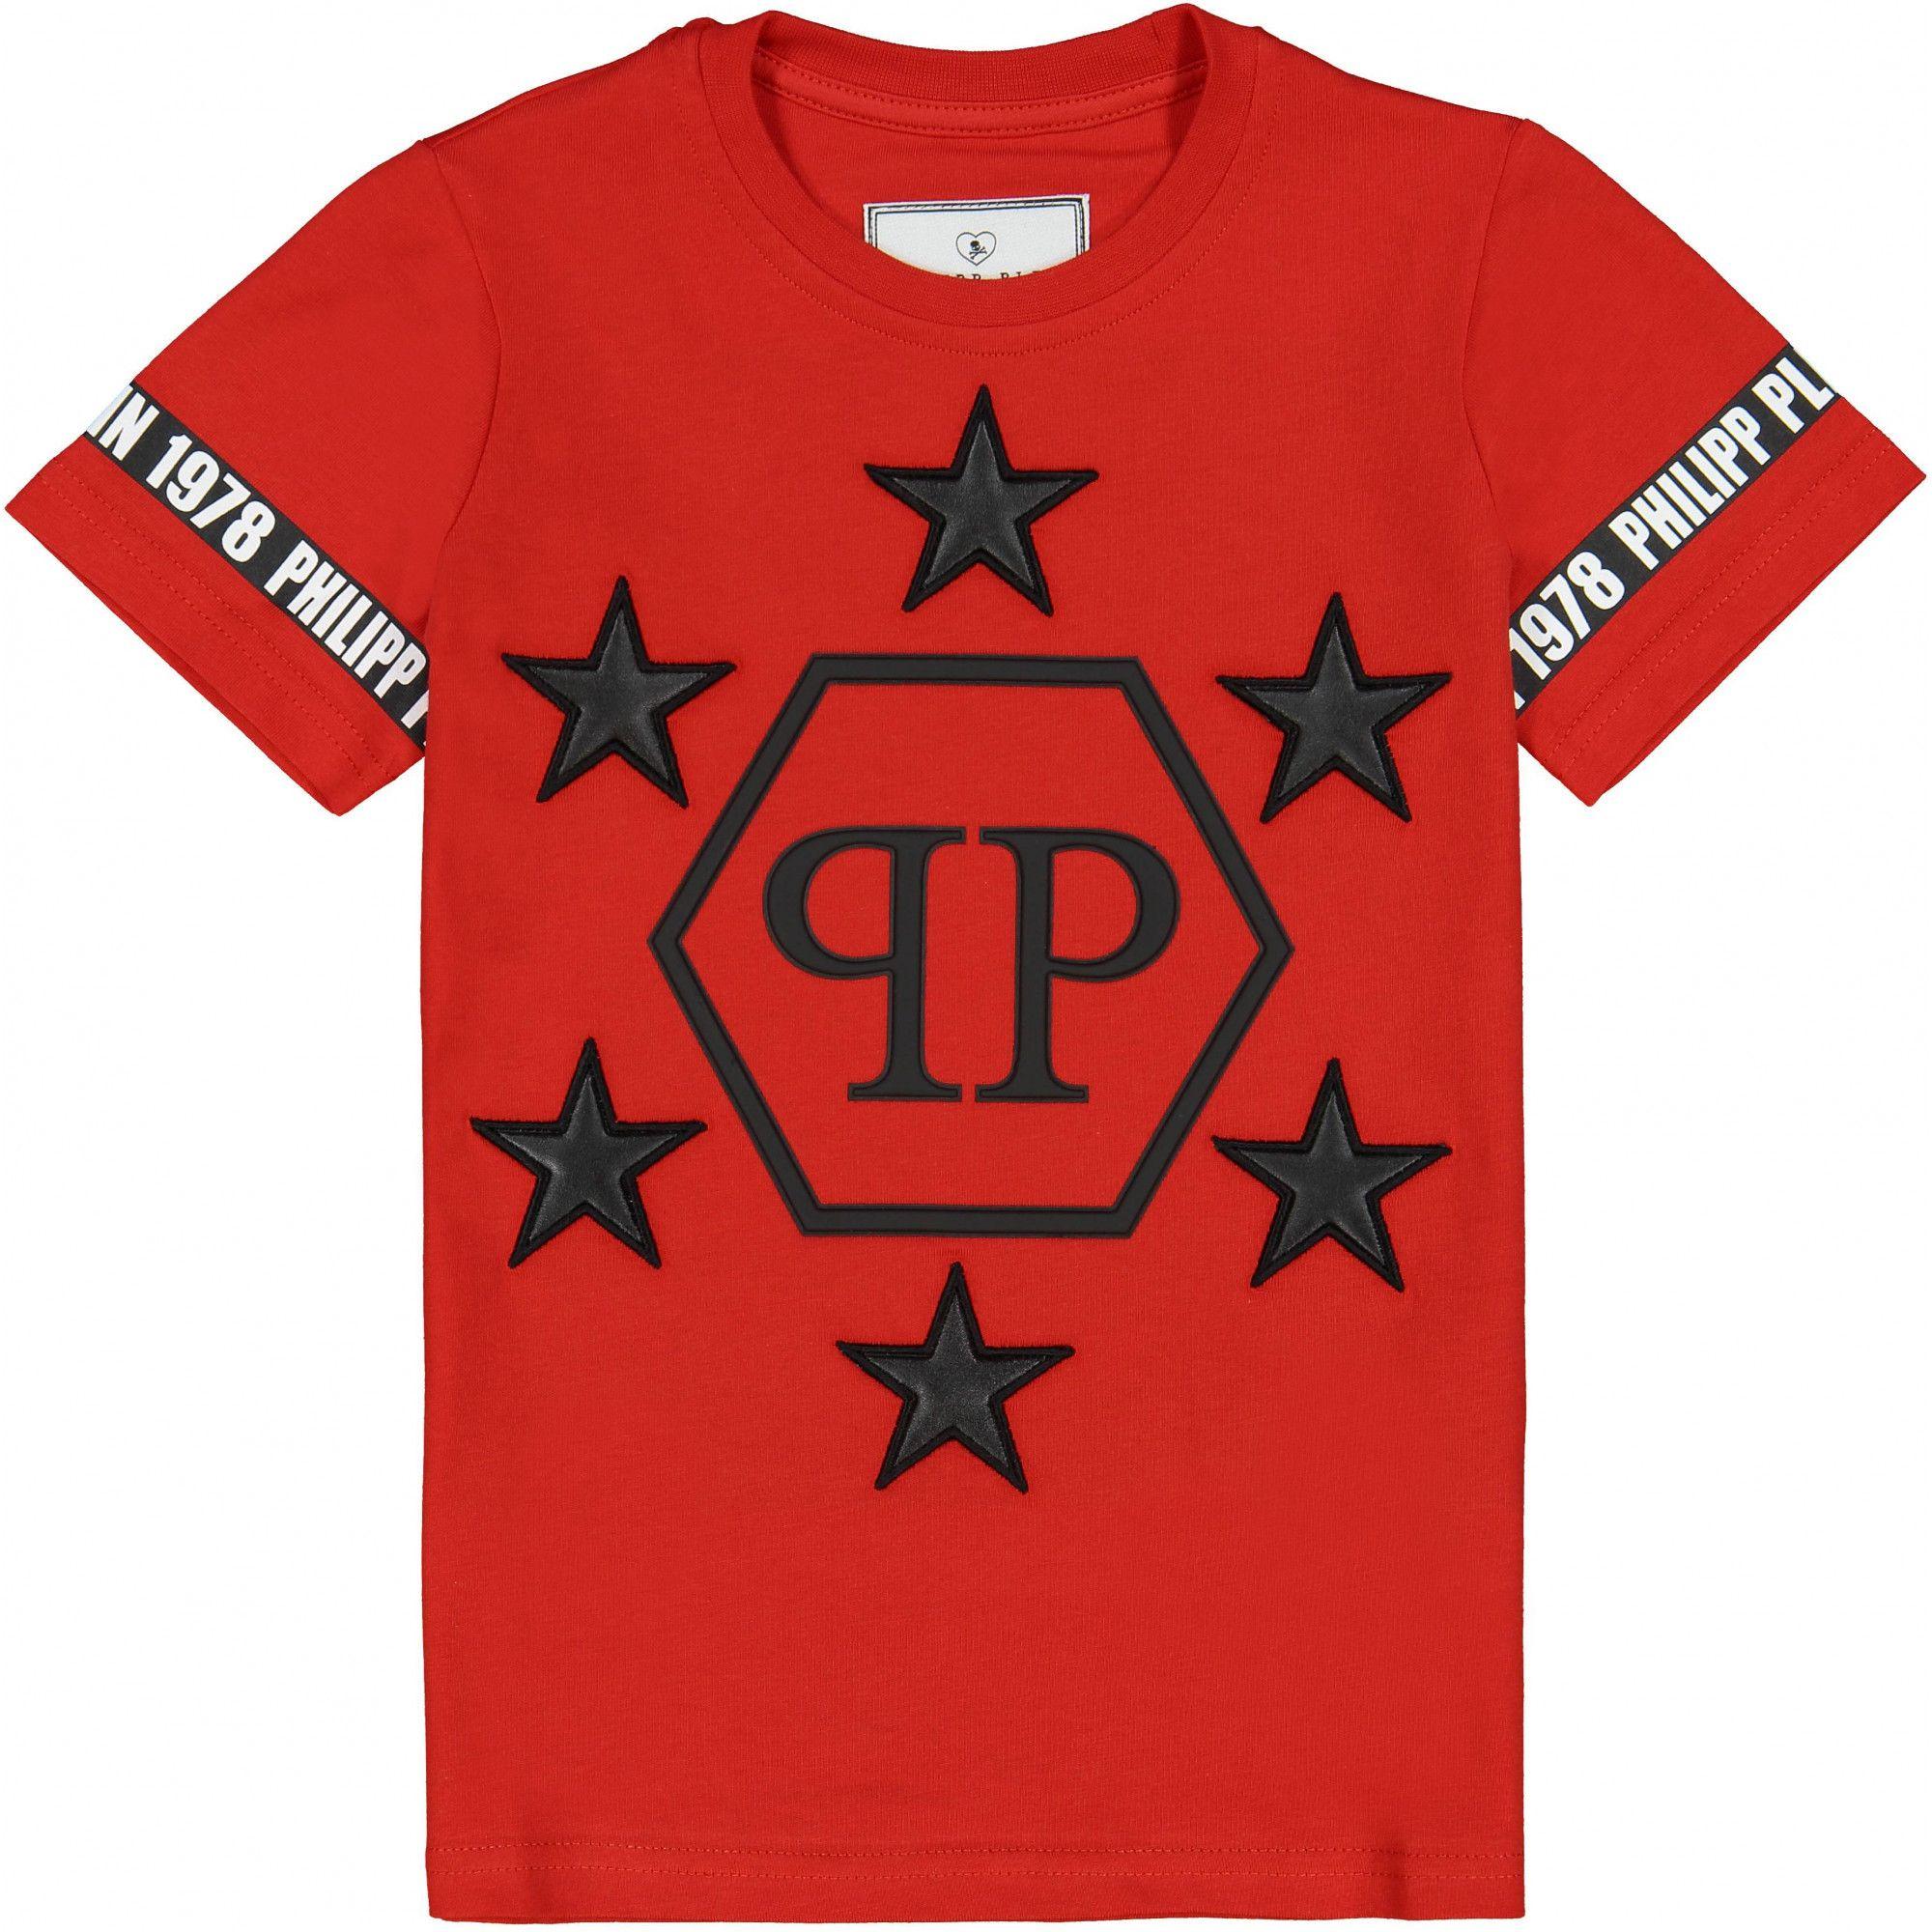 Double P Logo - Philipp Plein Boys Red T-Shirt with Double P Logo